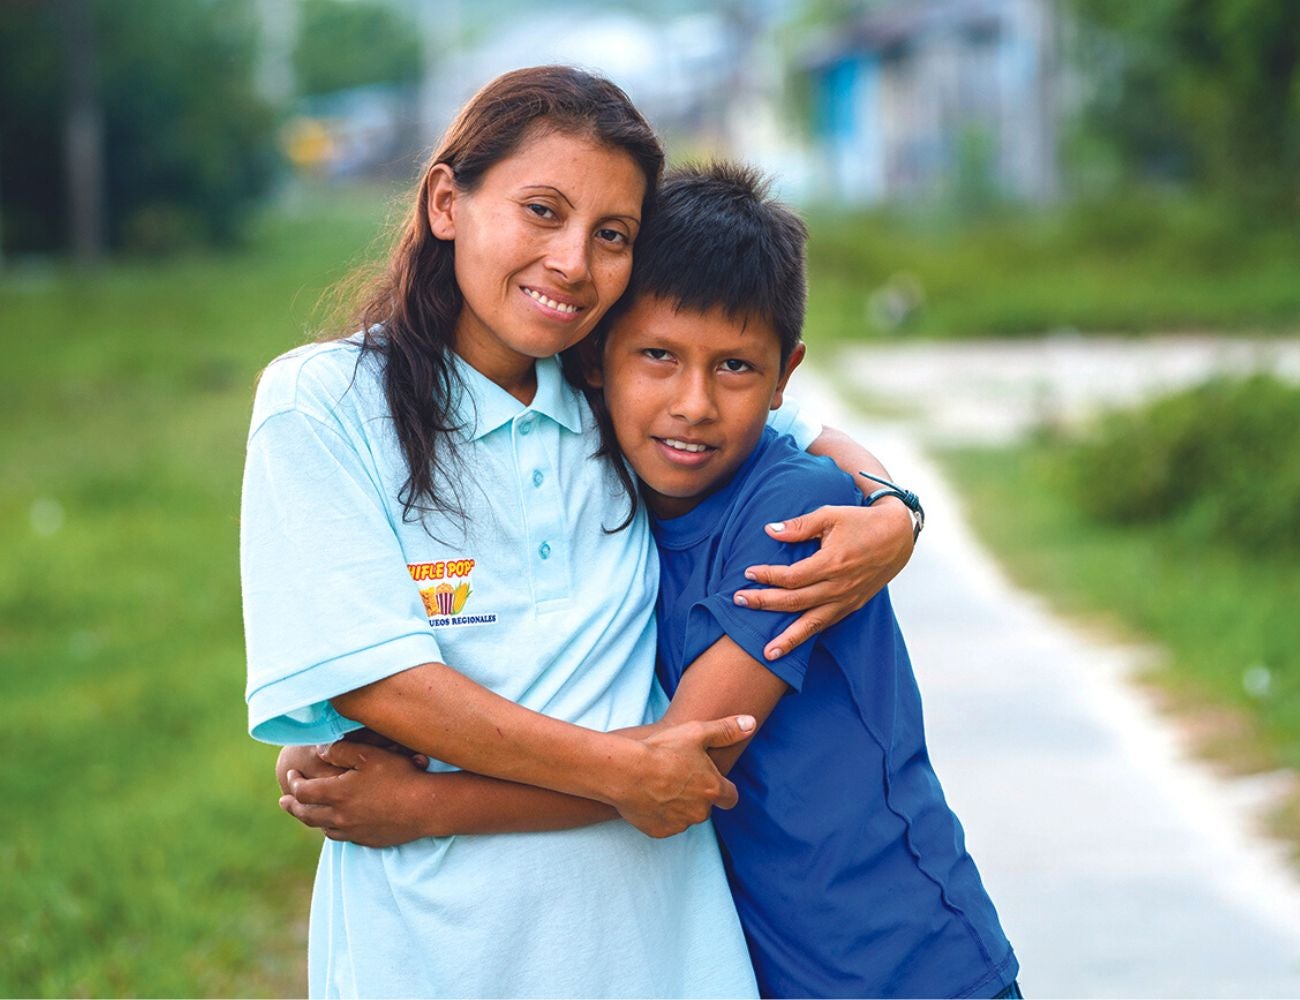 provision for Peruvian family